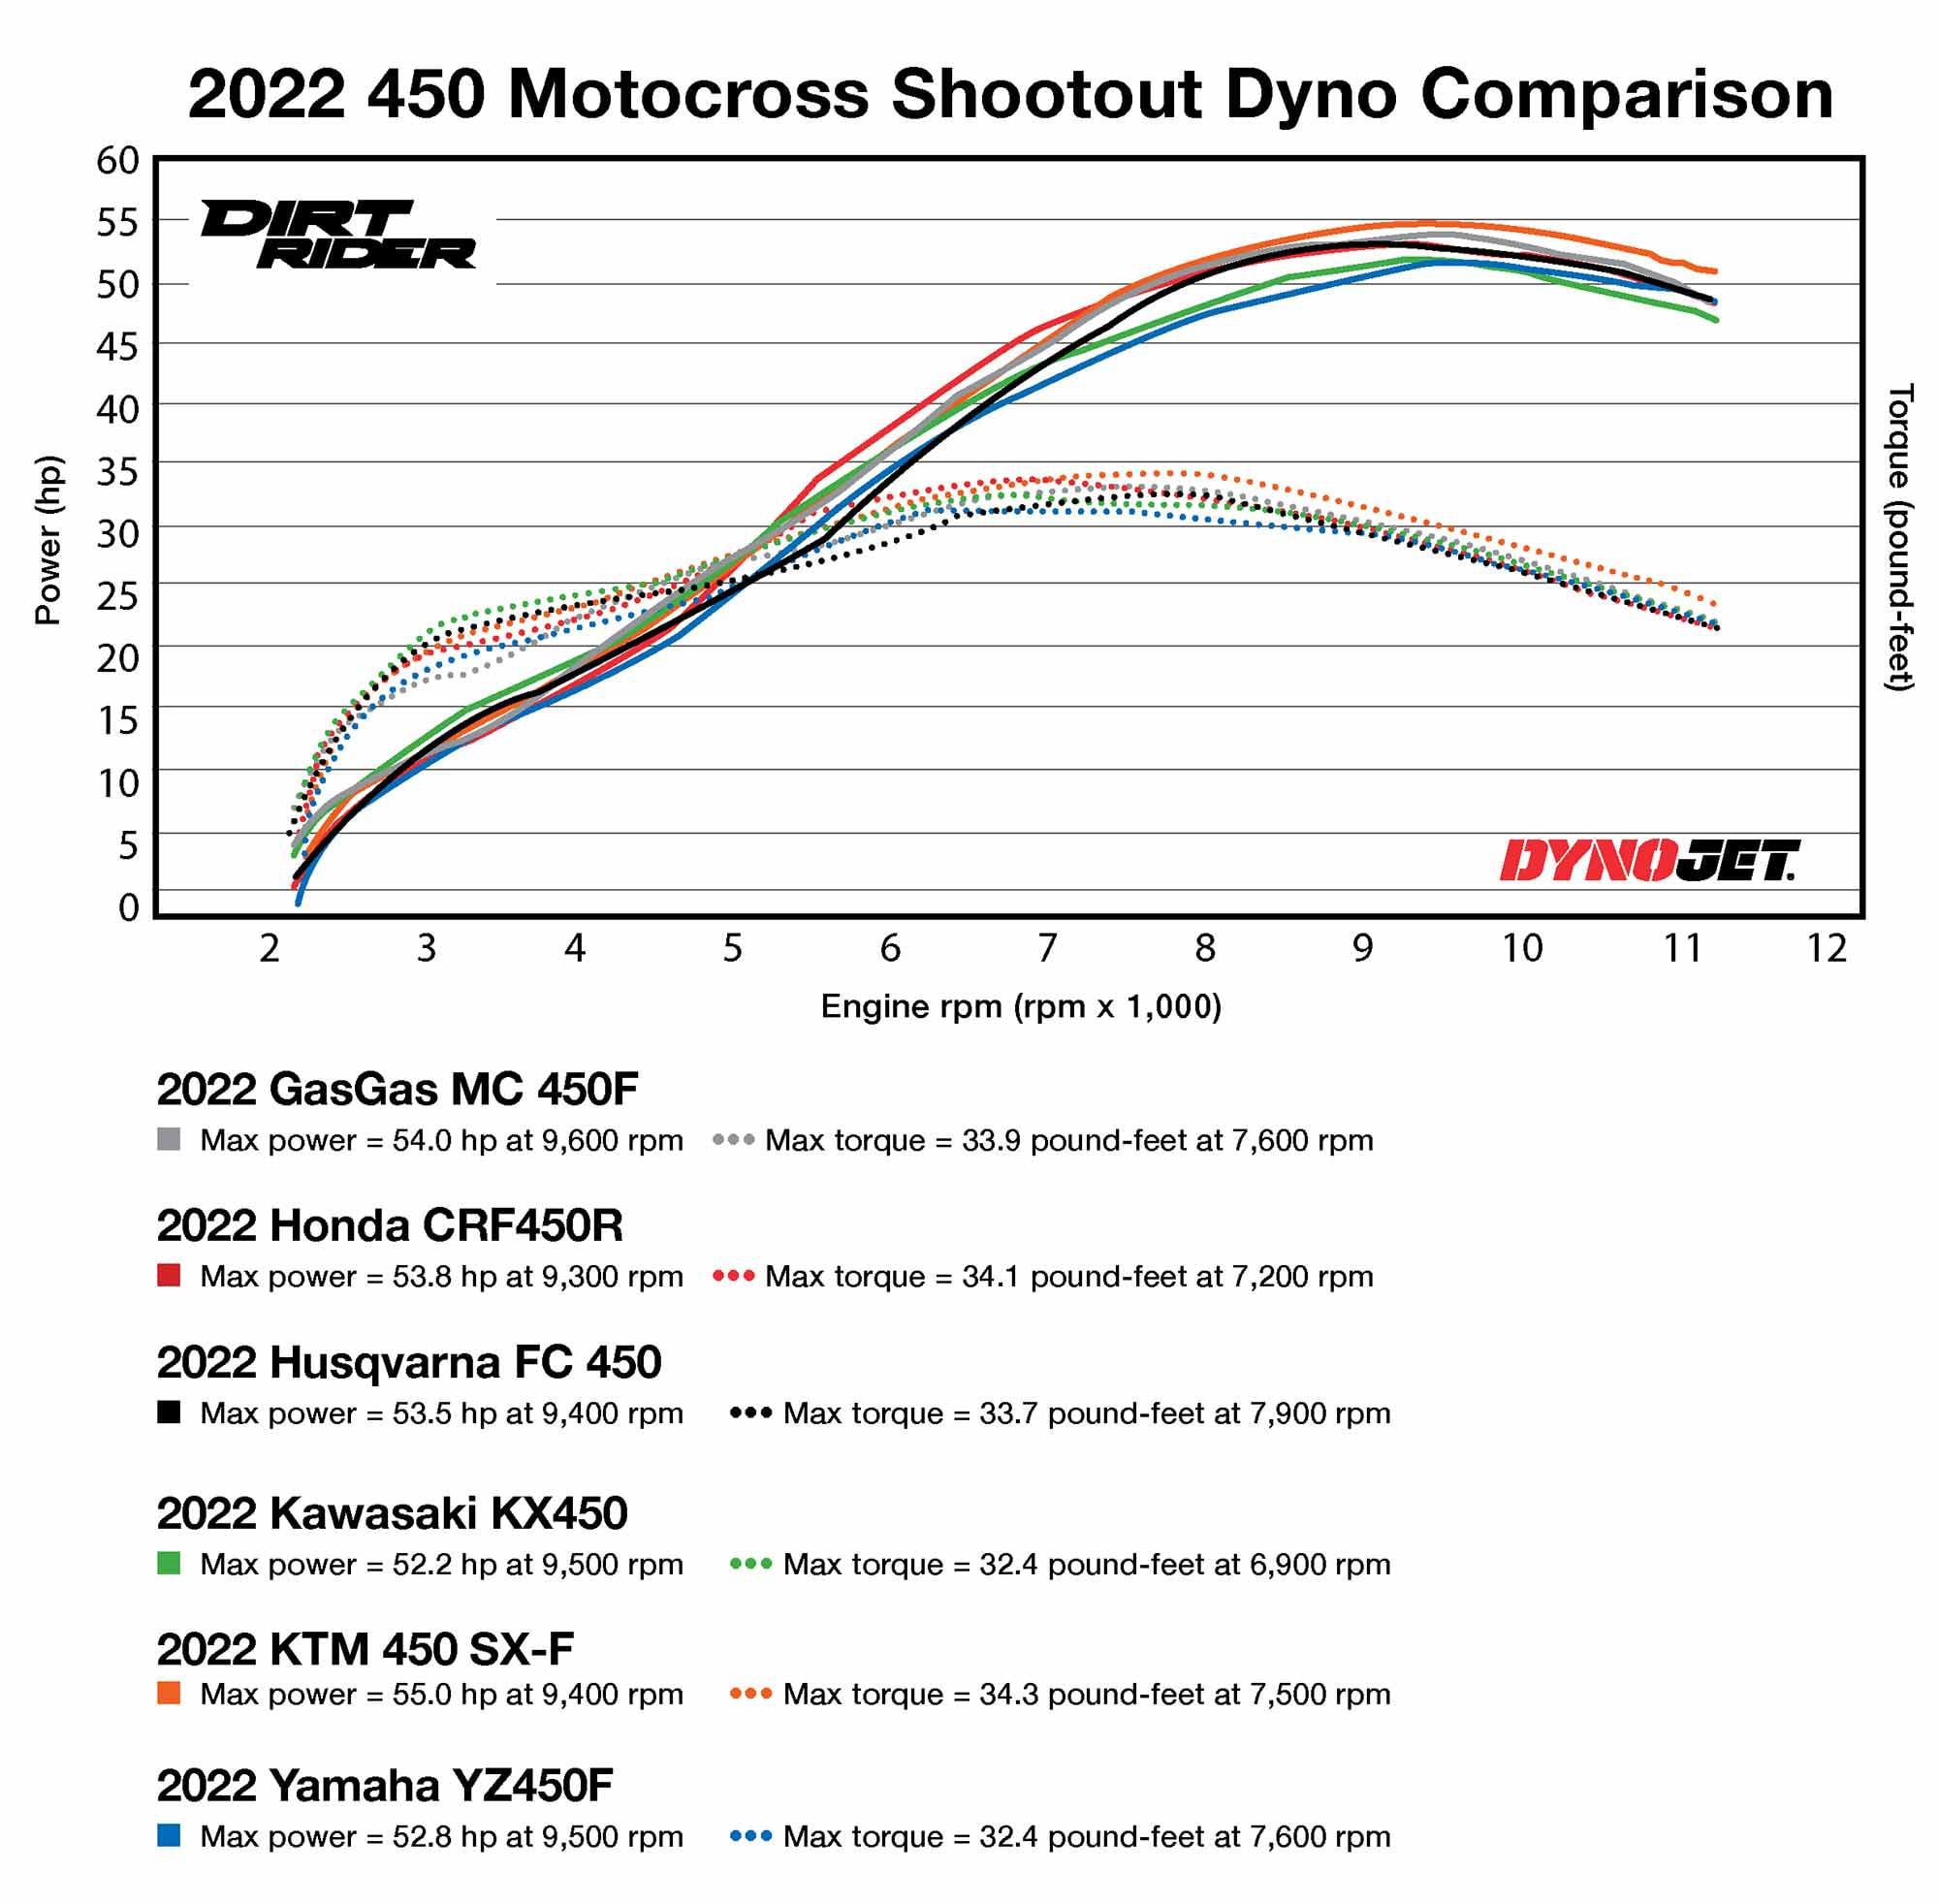 2022 450 Motocross Shootout Dyno Comparison Chart.